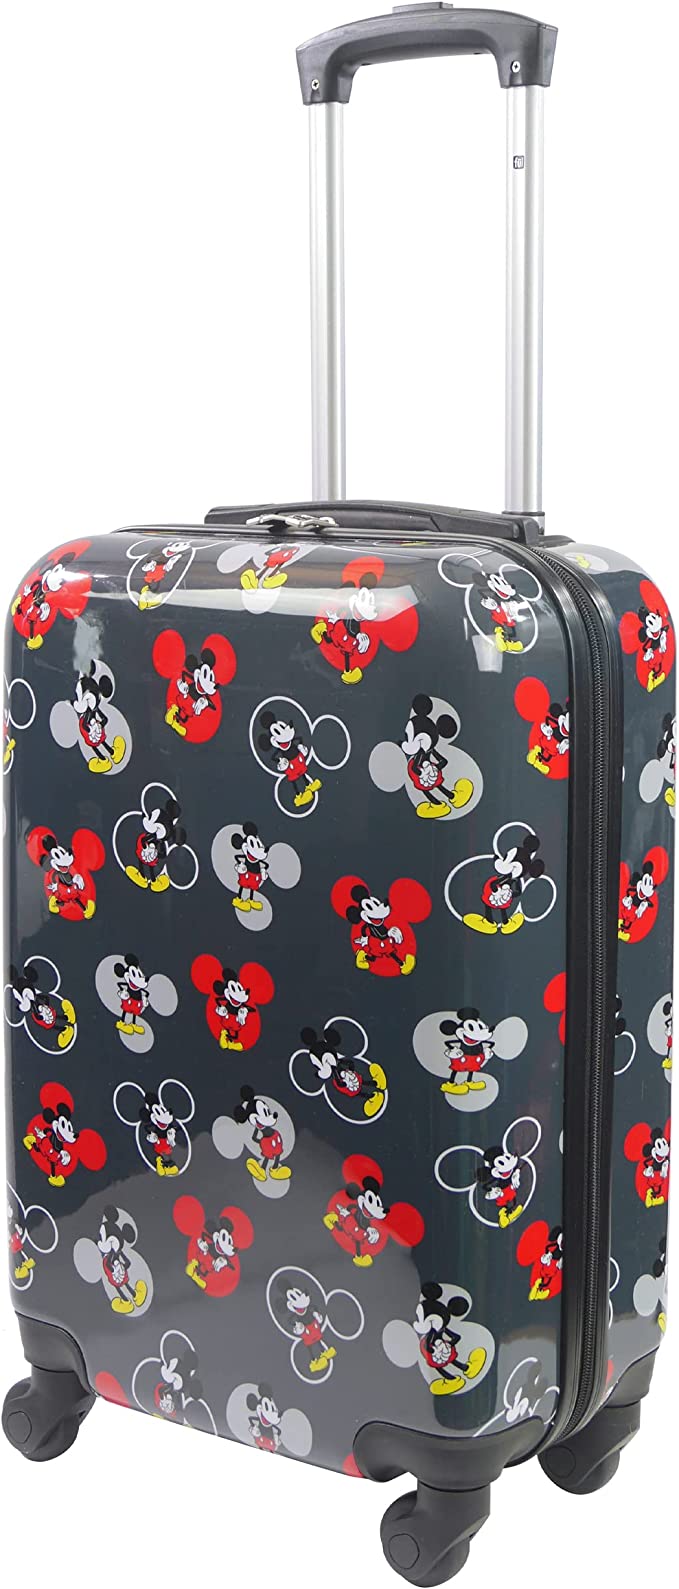 New Disney Travel Bag Mickey Mouse Travel Bags Women Portable